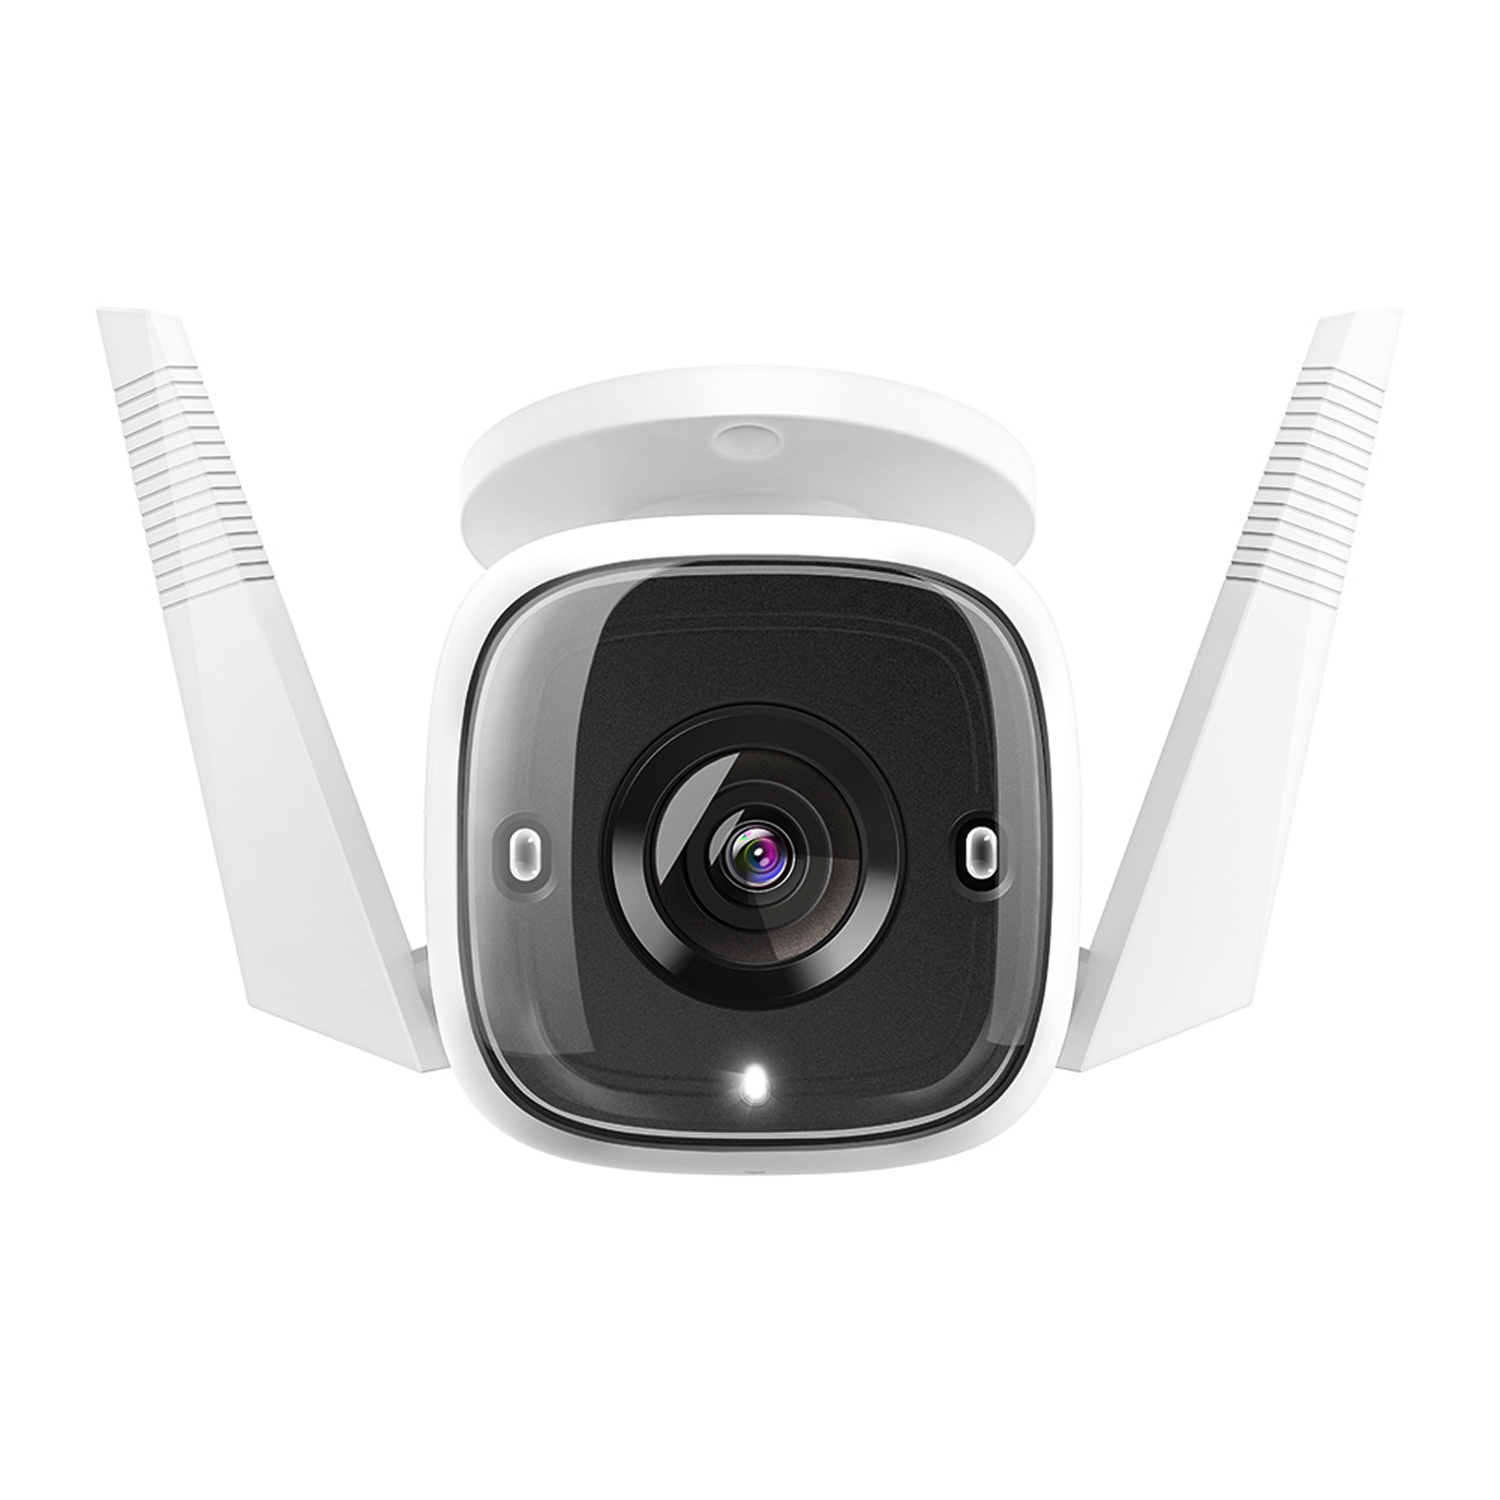 Câmera de Segurança Tp-link Tapo C310 Wifi / 3MP / 1080P - Branco
